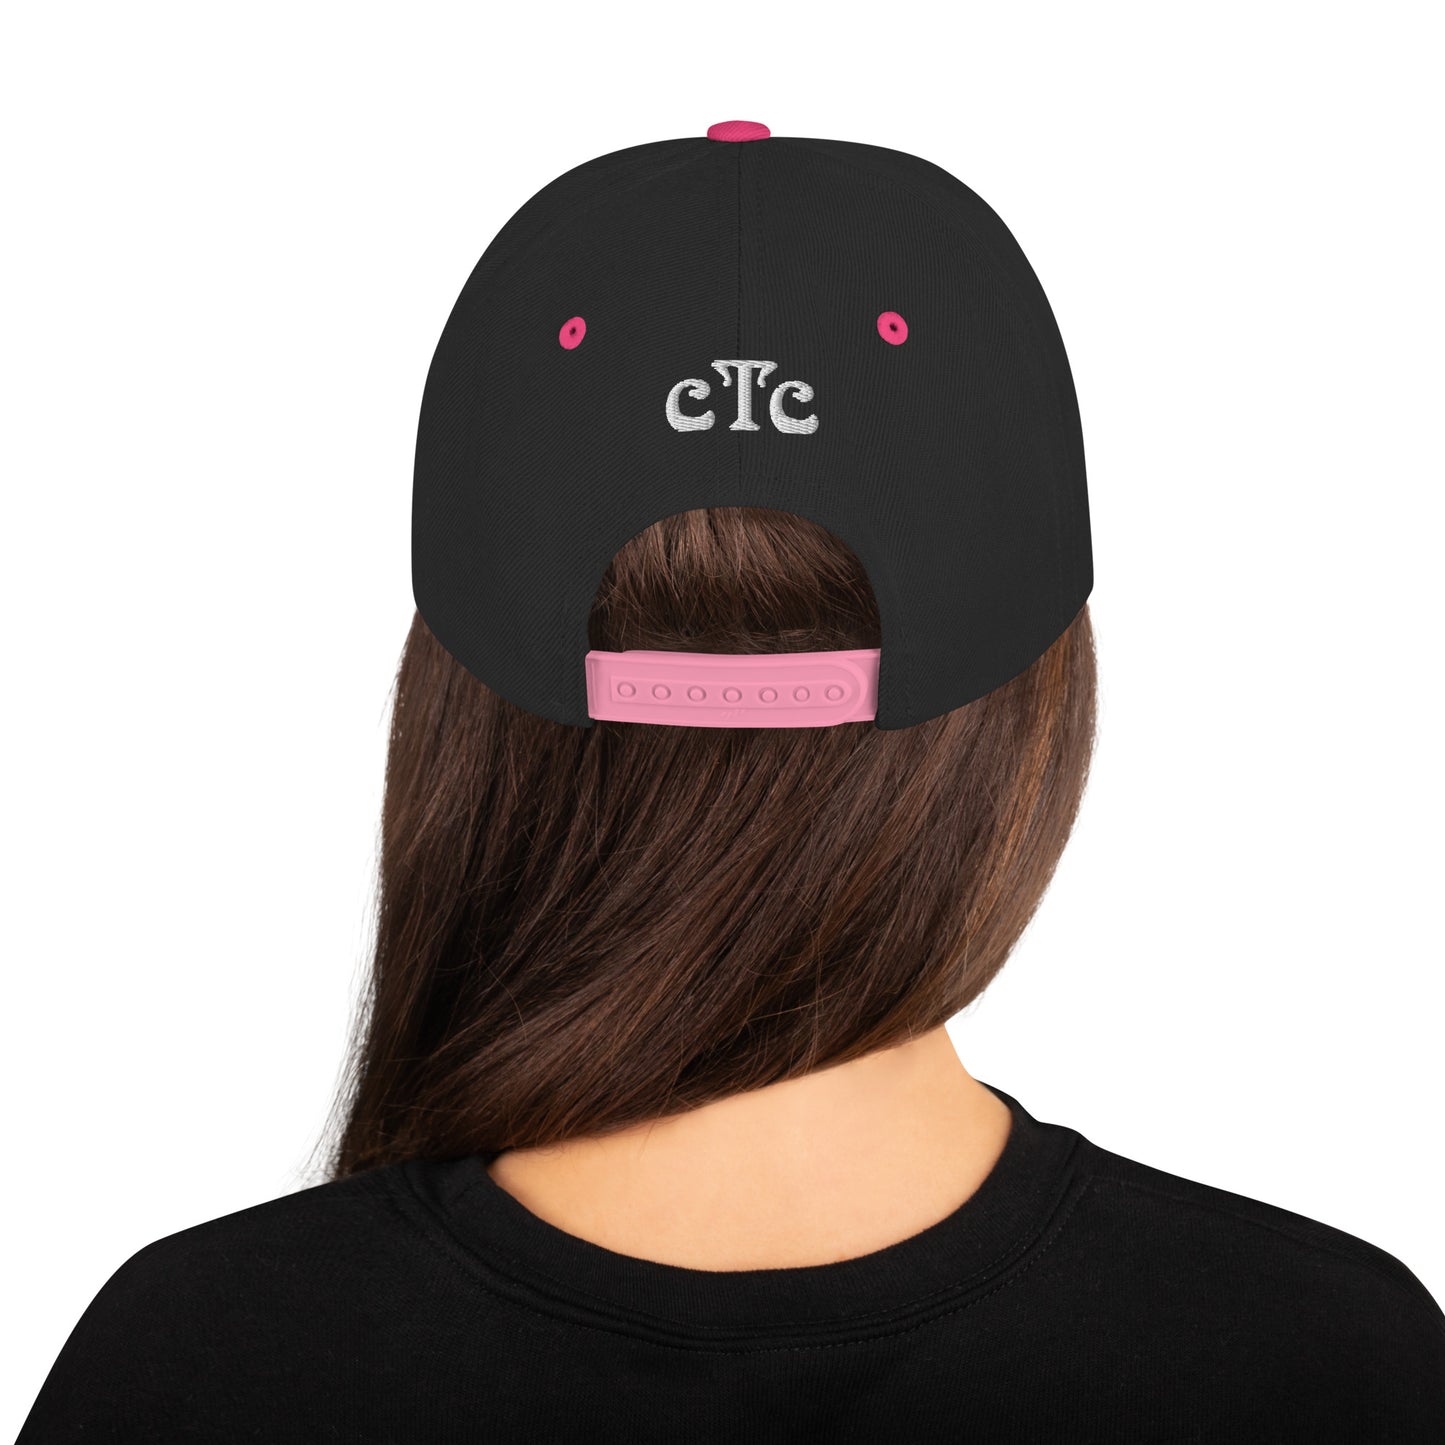 Closer Club Snapback Hat